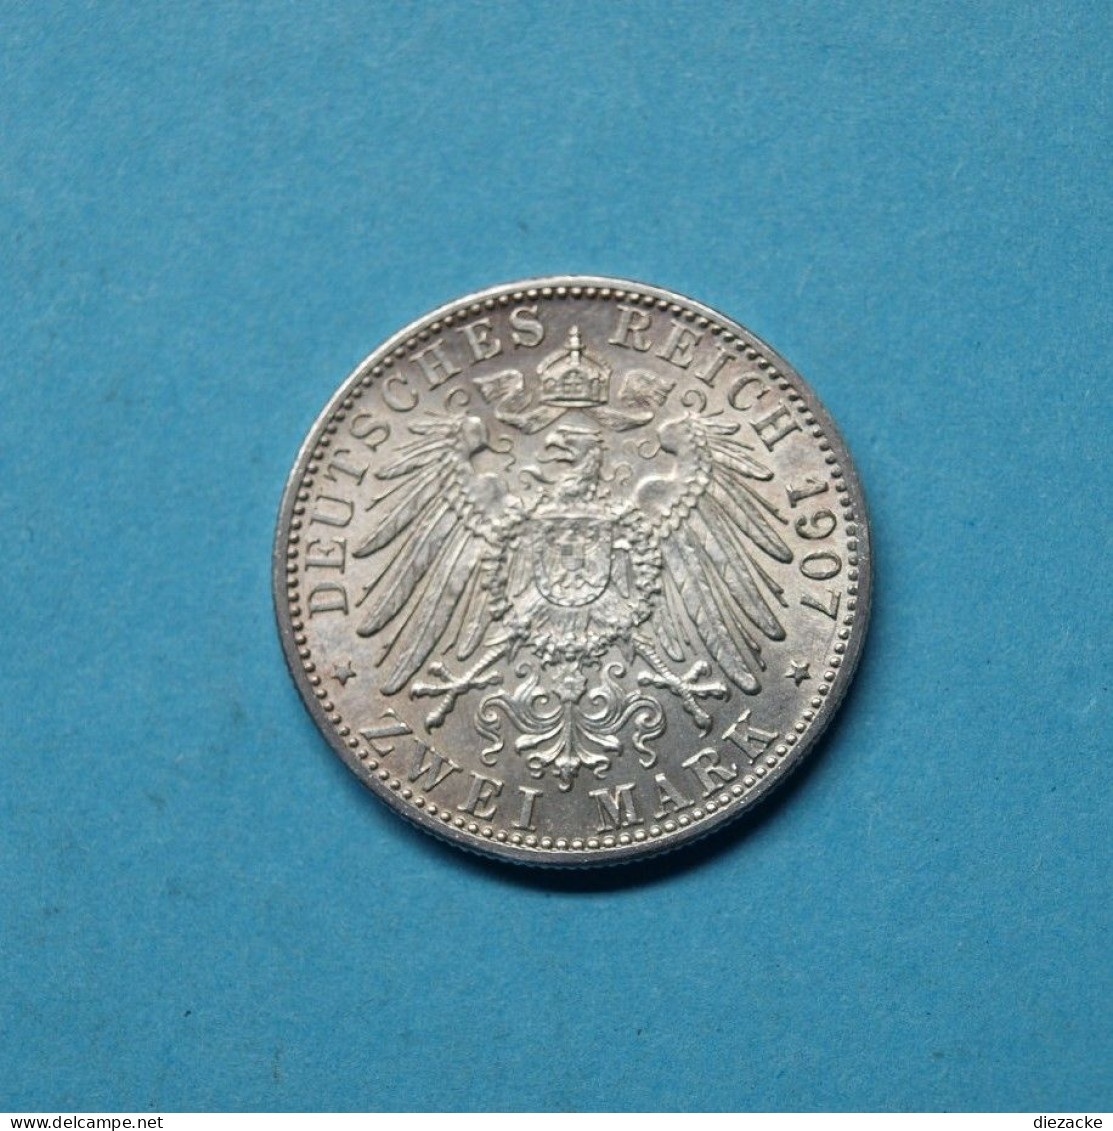 Baden 1907 2 Mark Friedrich I. ST (EM627 - 2, 3 & 5 Mark Silber